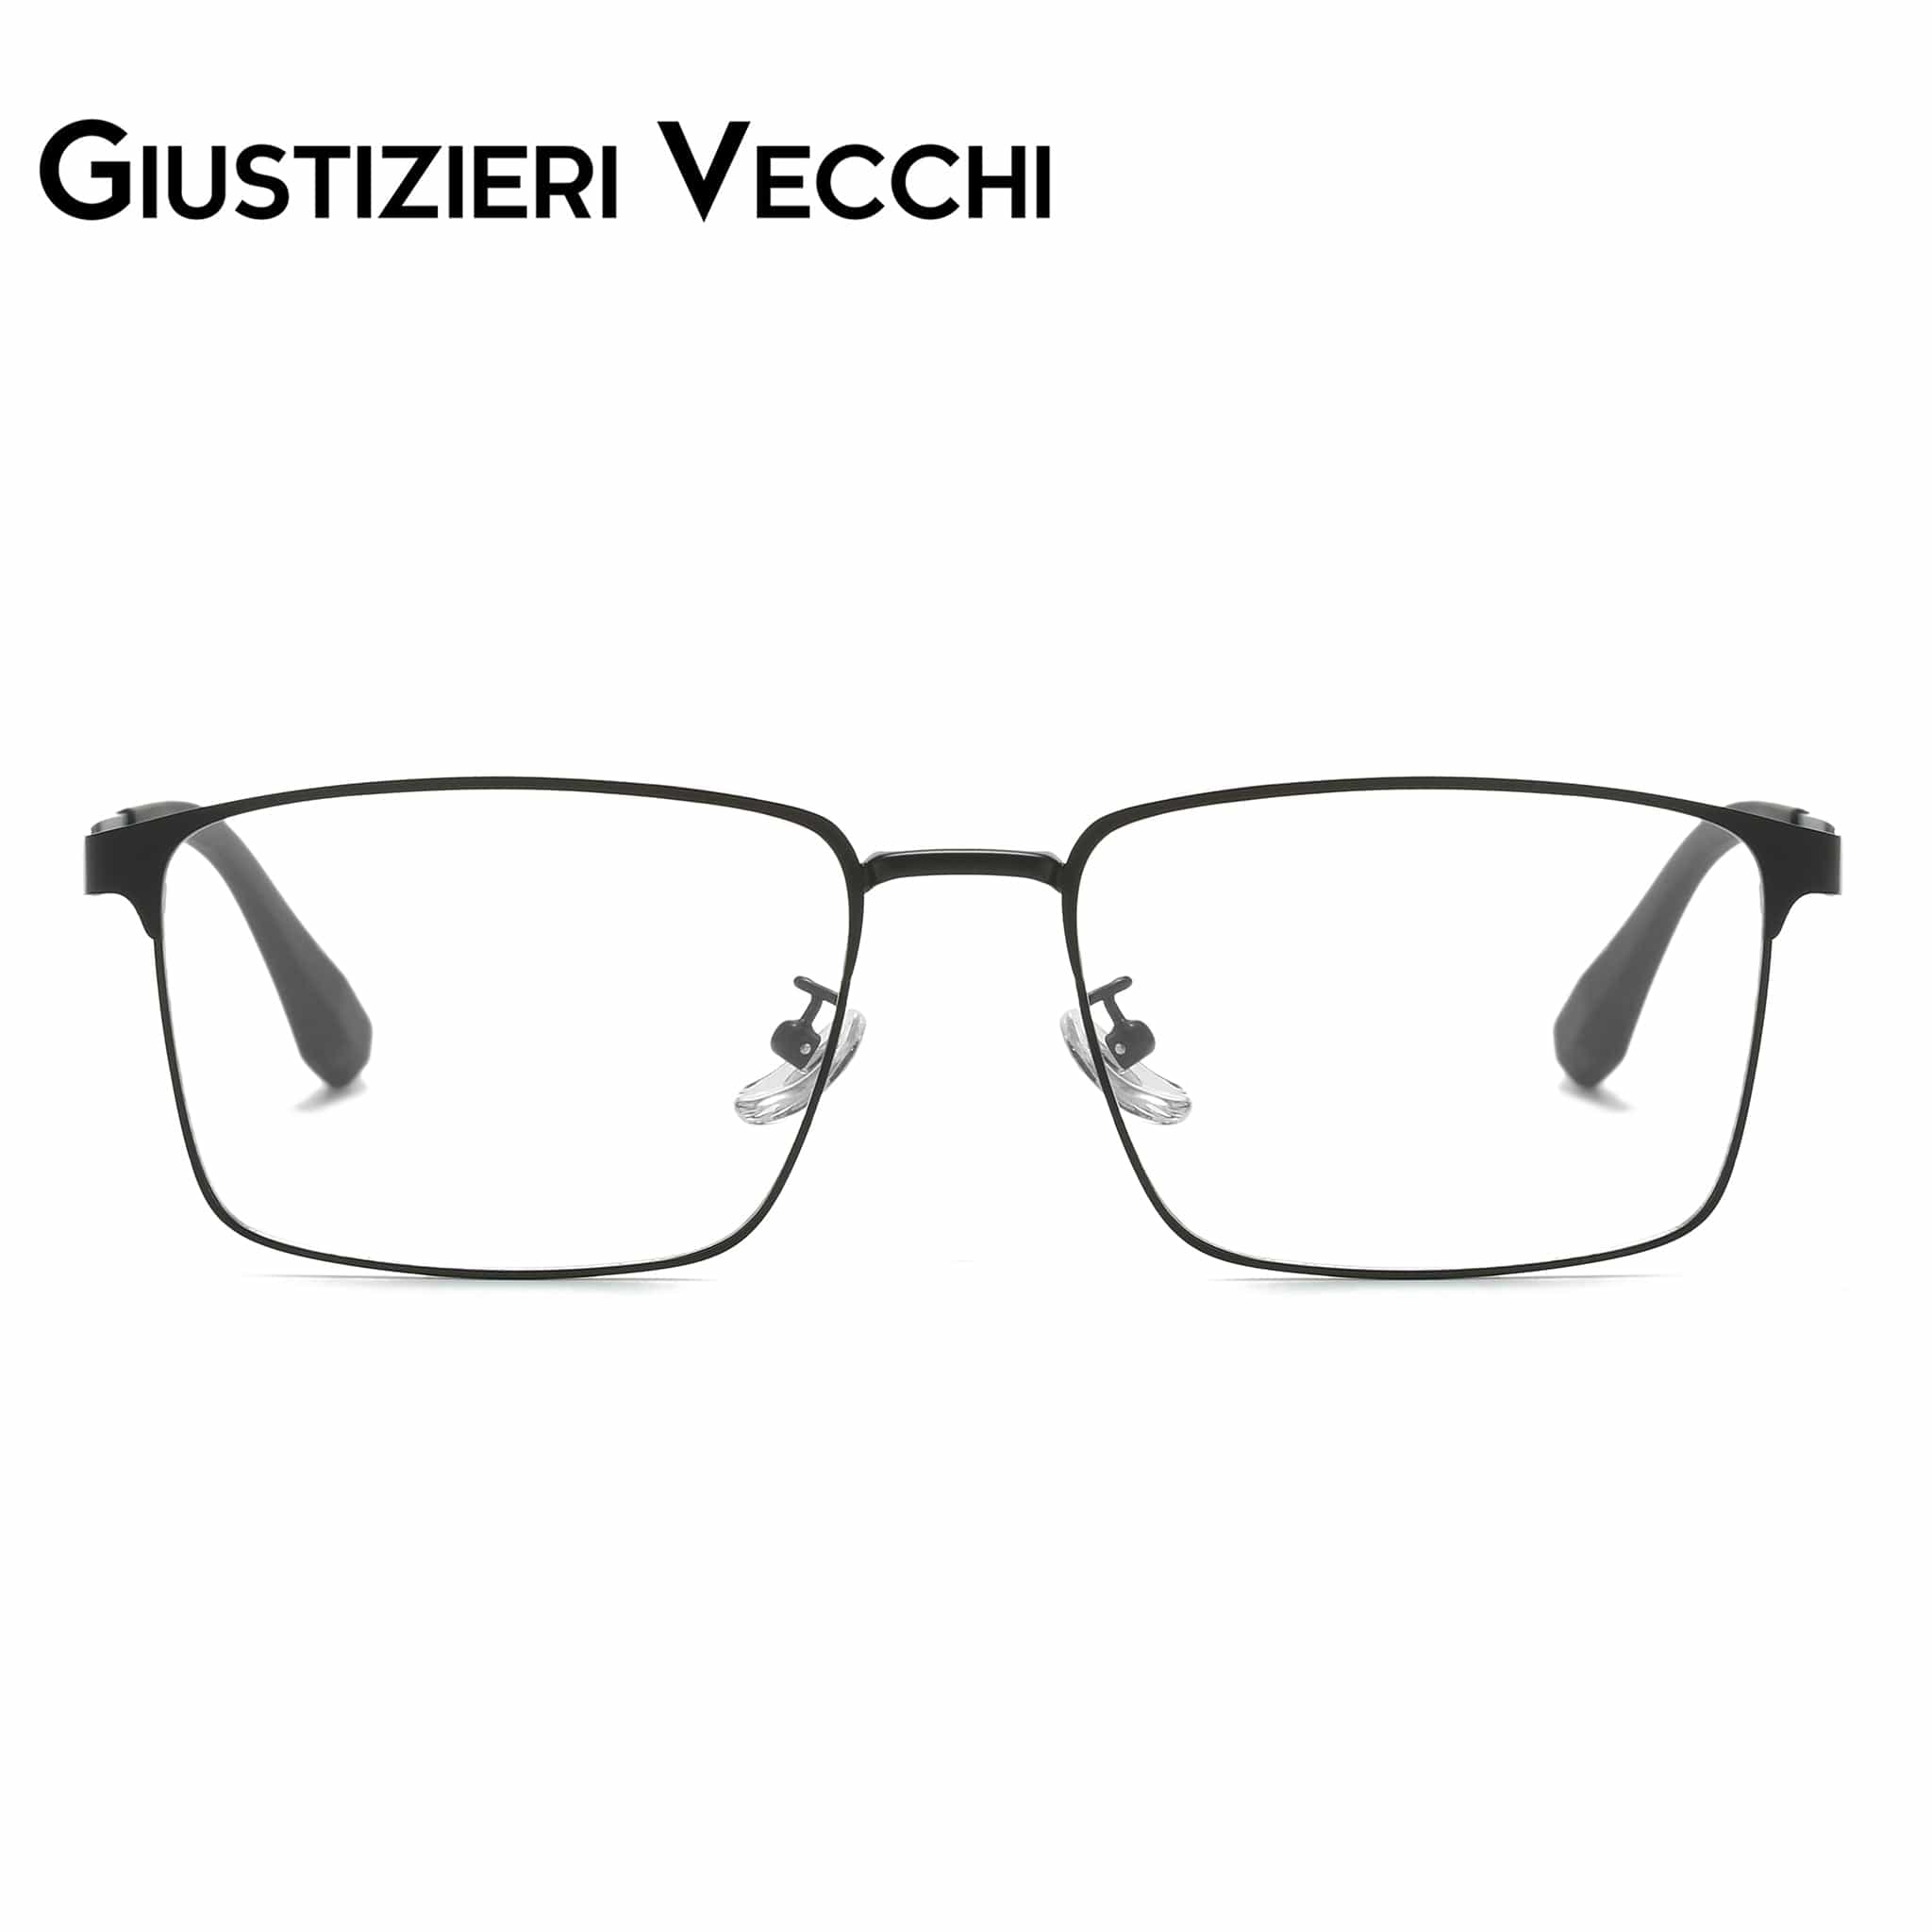 GIUSTIZIERI VECCHI Eyeglasses Large / Black SkyRider Uno